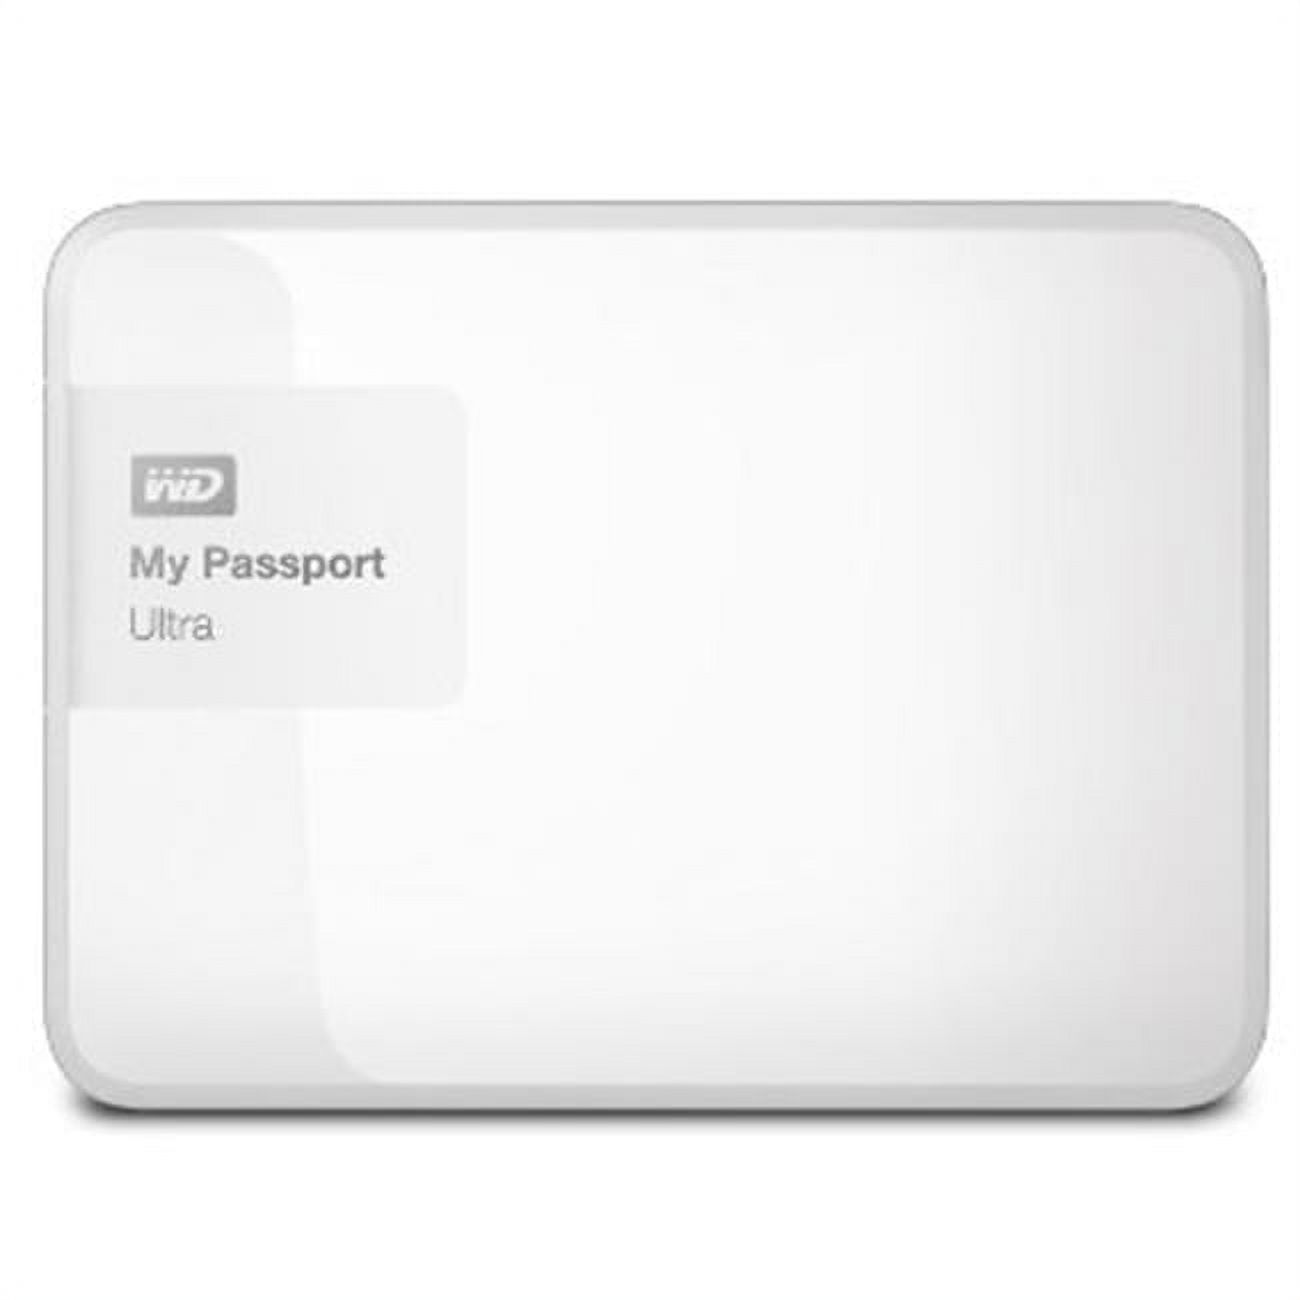 WD My Passport Ultra WDBGPU0010BWT-NESN 1 TB Portable Hard Drive, External, Brilliant White - image 1 of 5